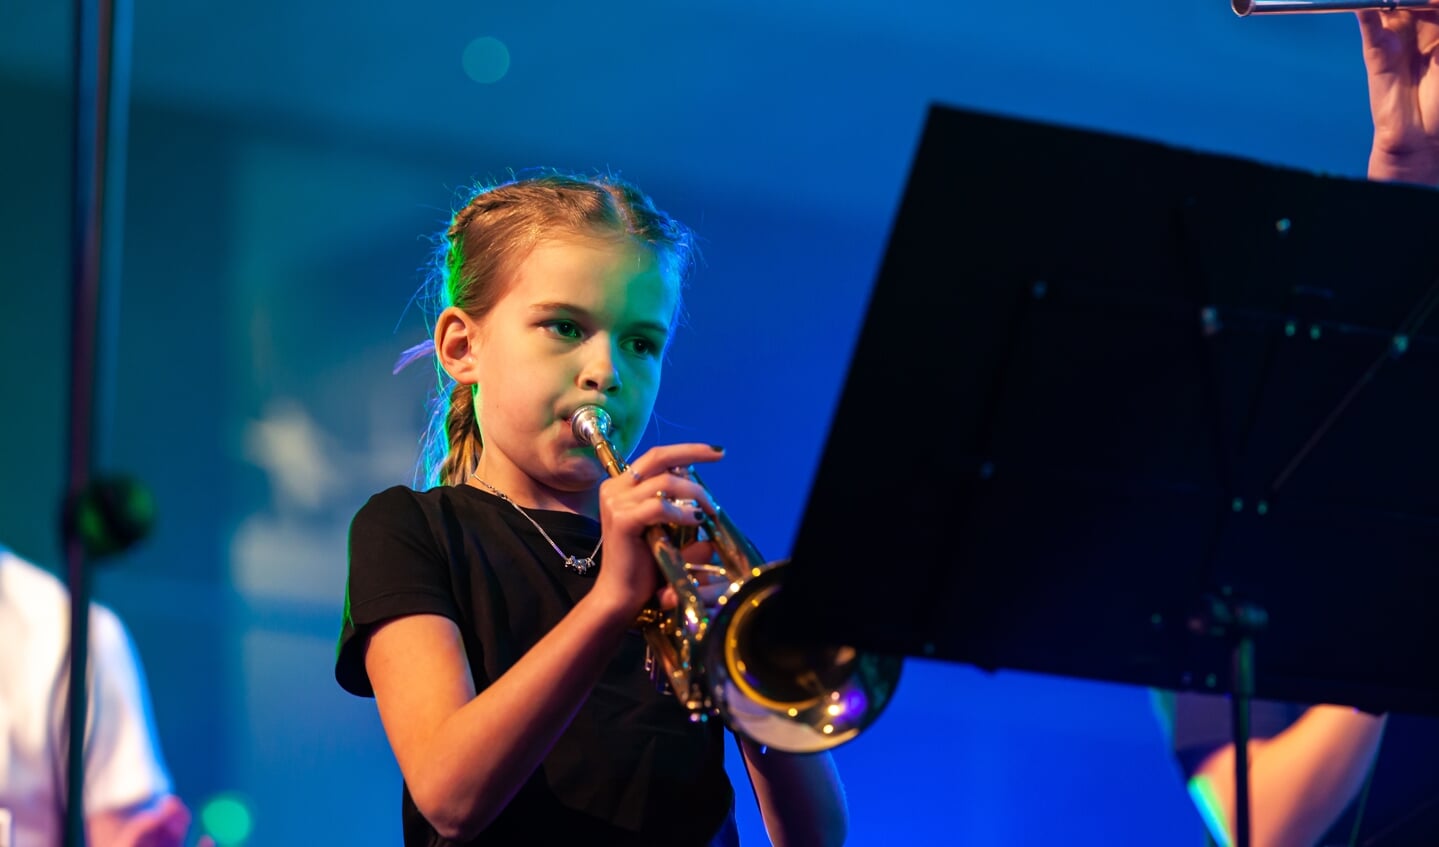 BazzBrass jeugdtalent op trompet